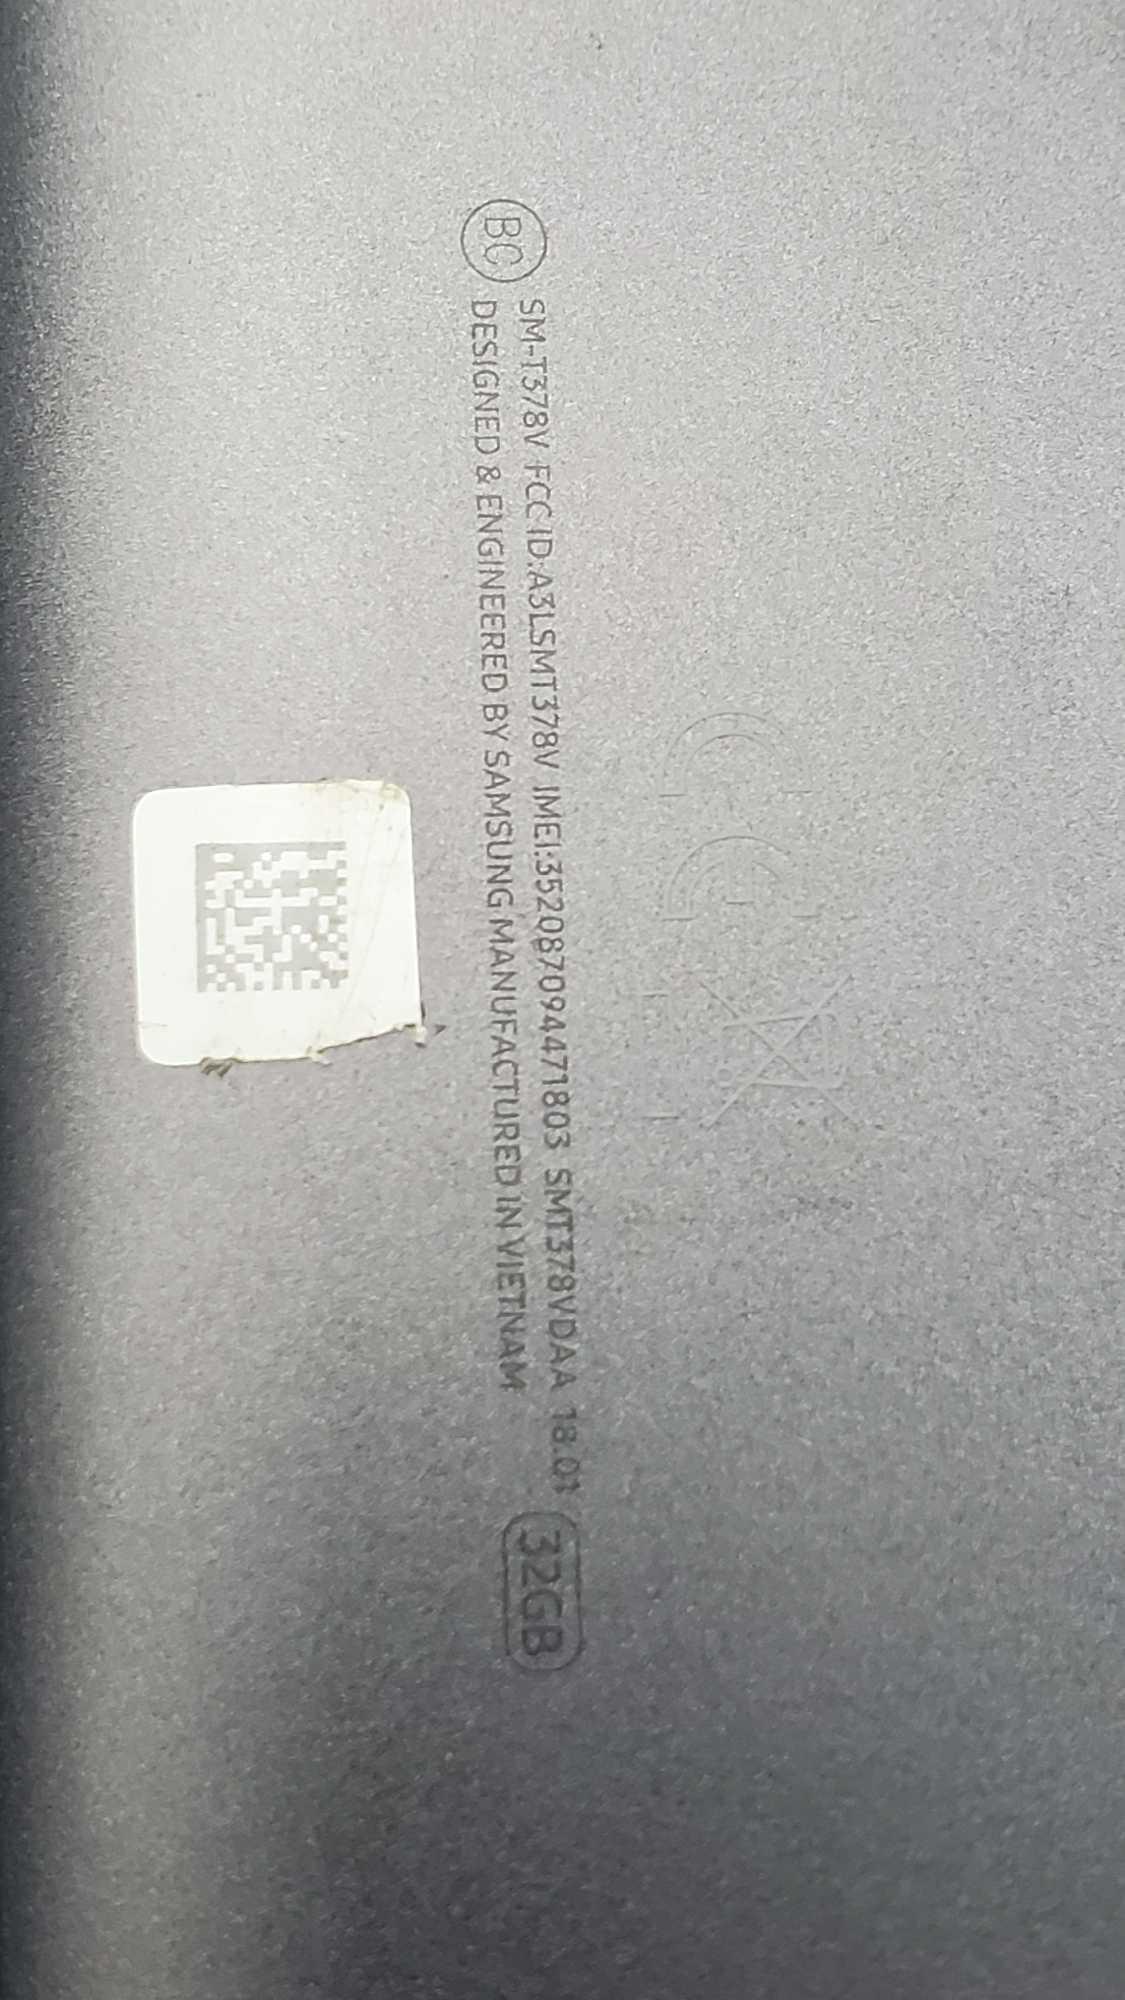 2 Verizon Samsung Galaxy Tab E 32GB tablets Apple IPod 3GB